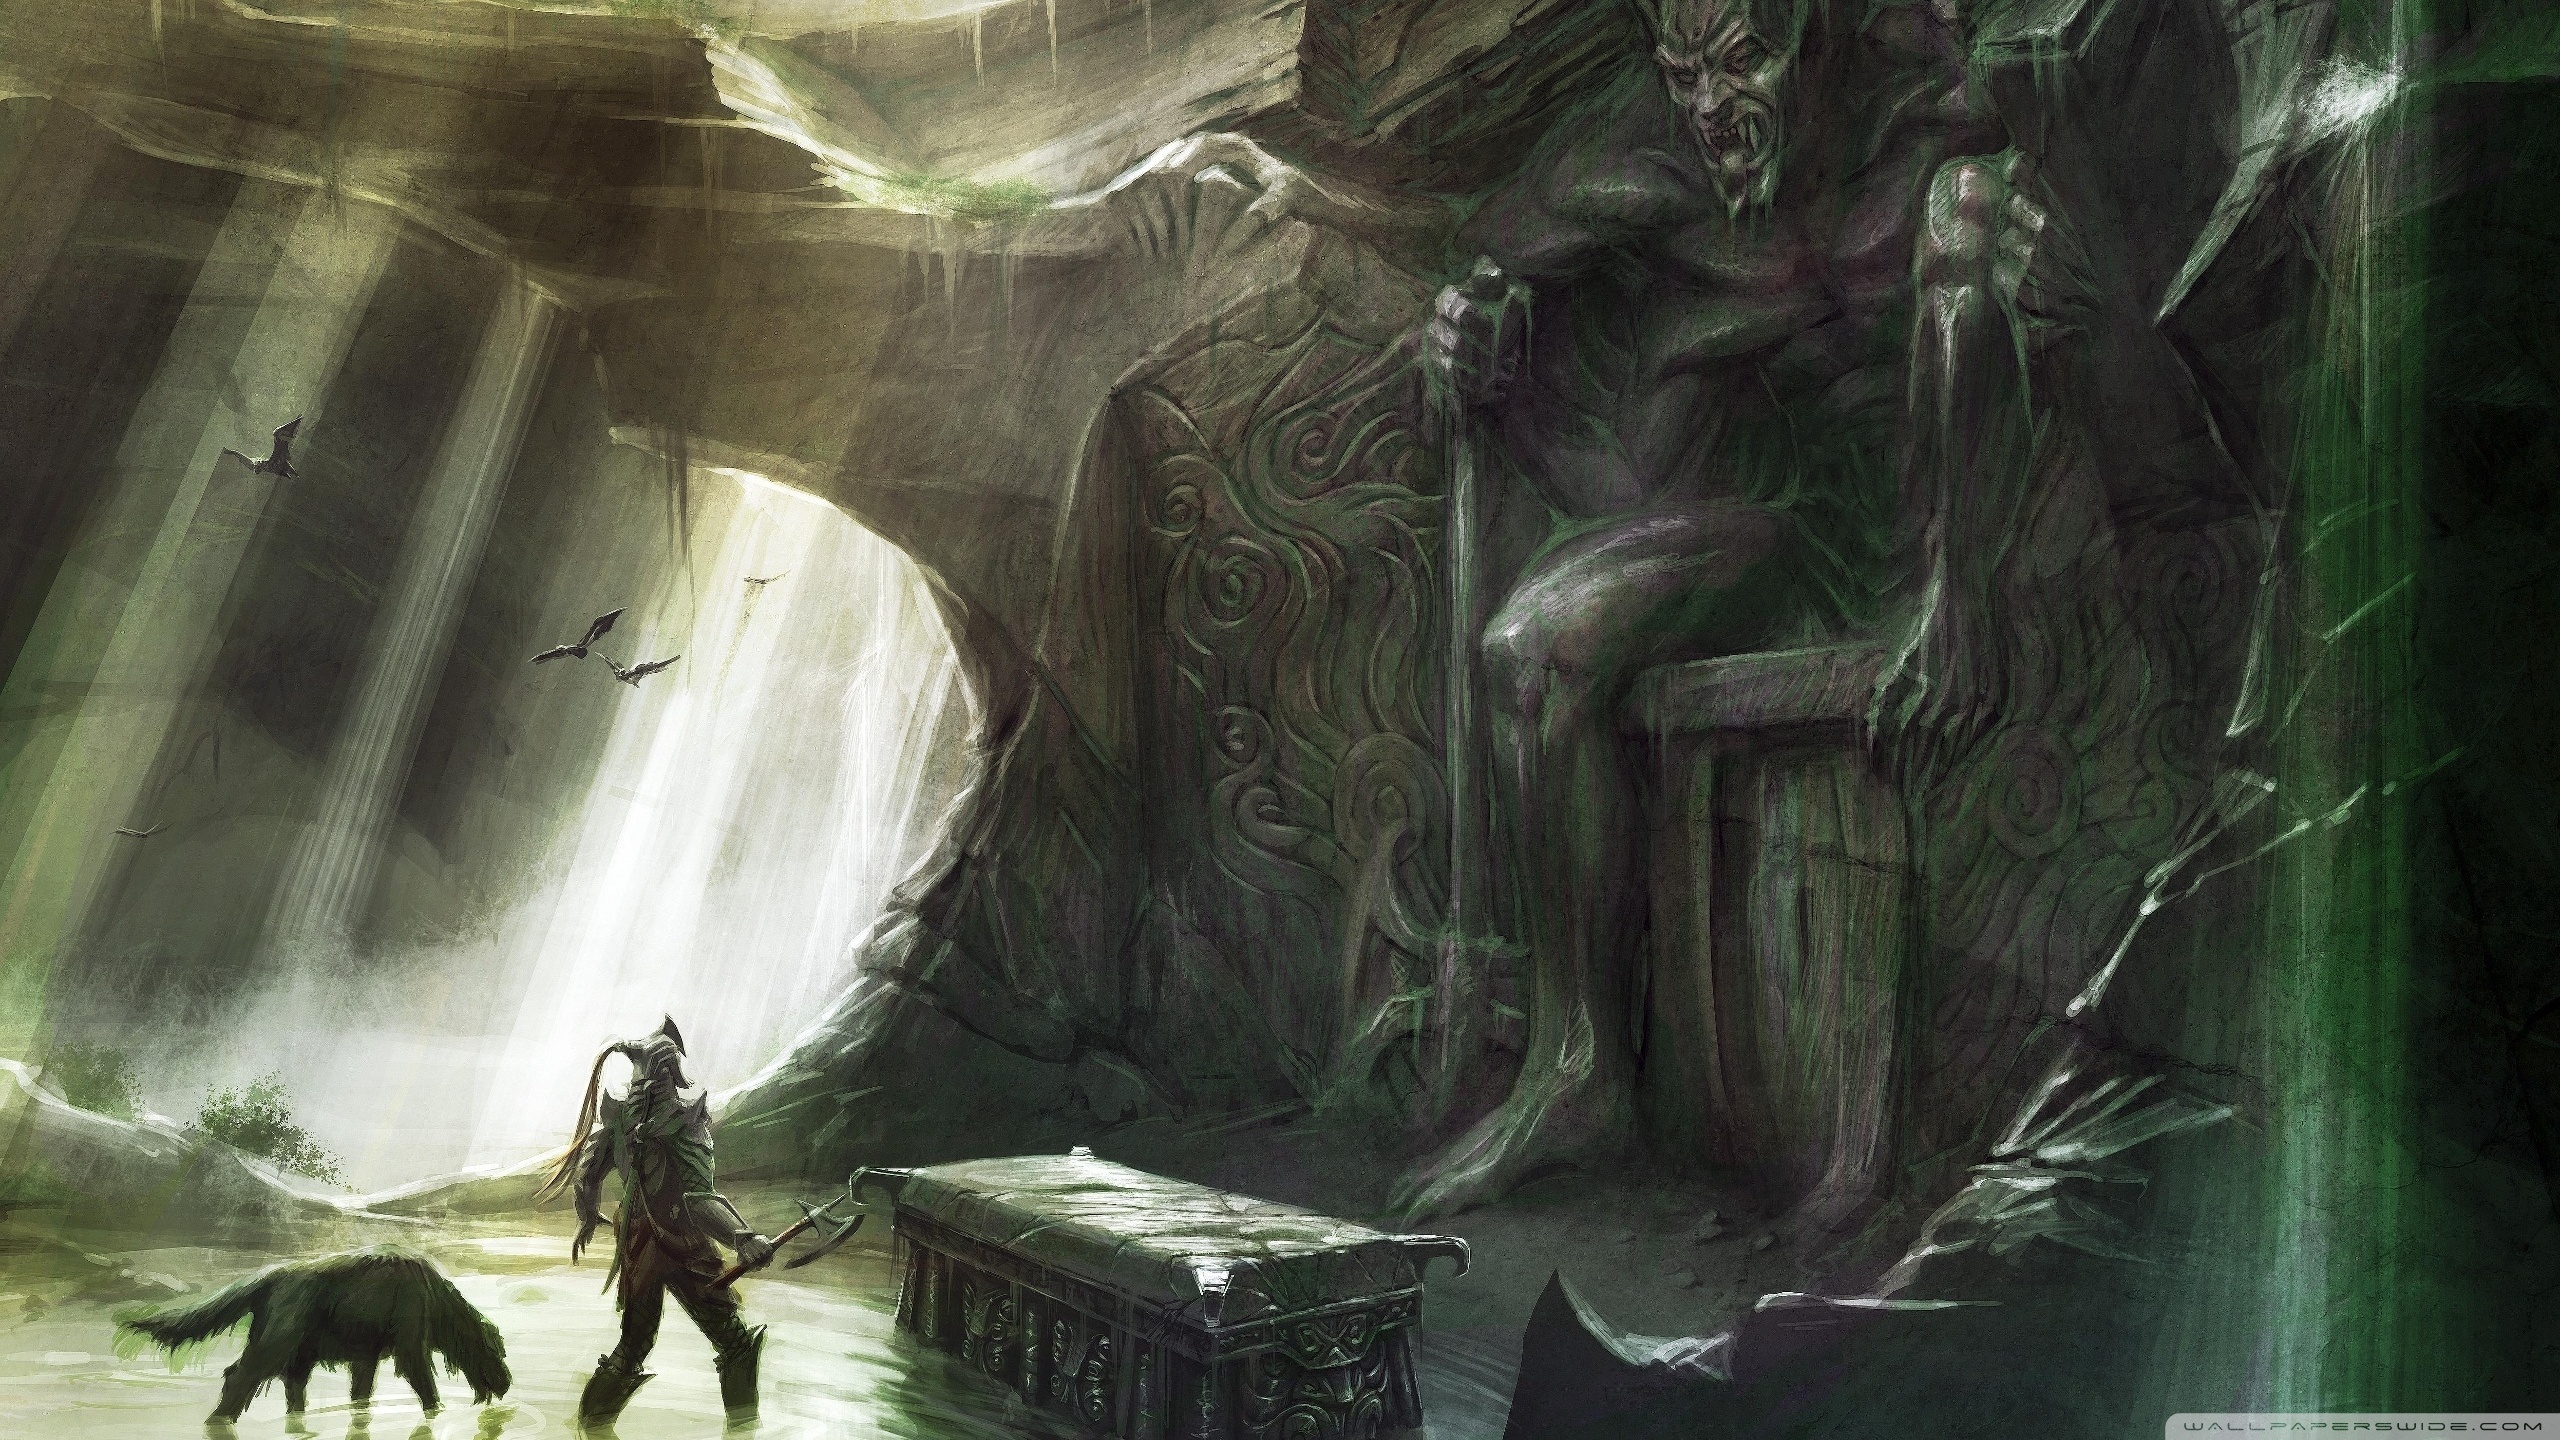 The Elder Scrolls V Skyrim Mehrunes Dagon Daedra Daedric Prince Altar The Elder Scrolls 2560x1440